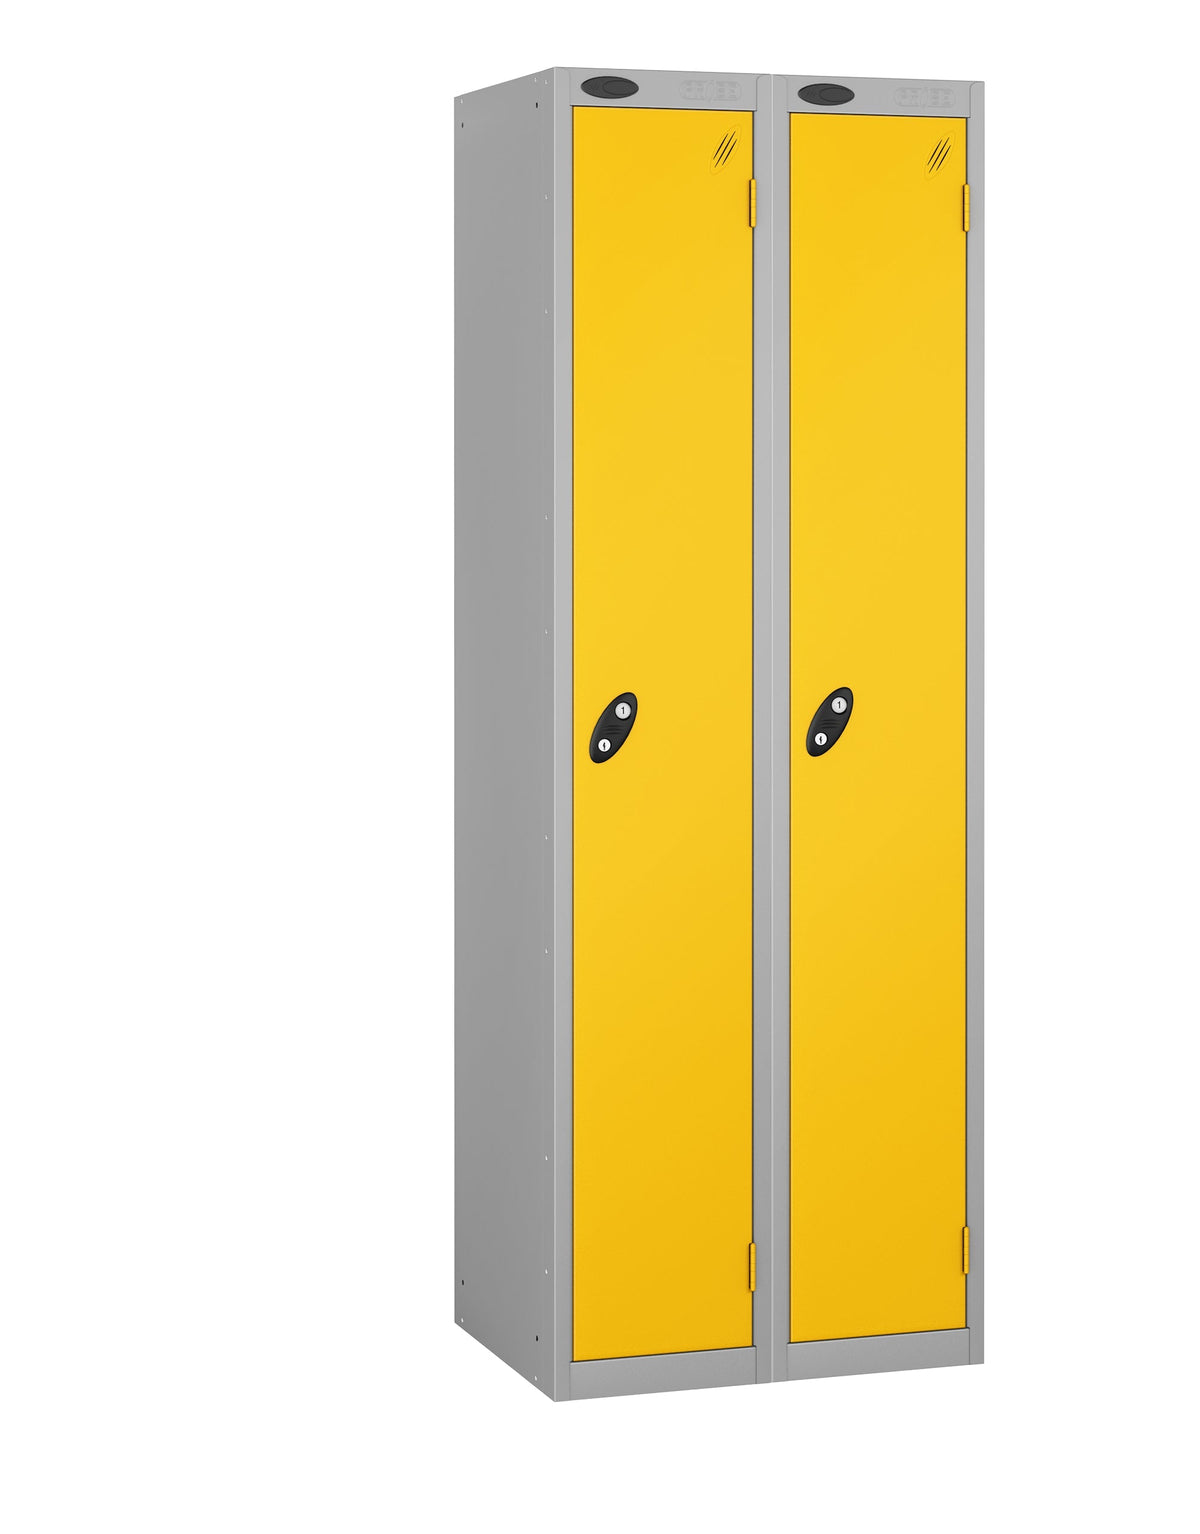 PROBEBOX STANDARD 2 NEST STEEL LOCKERS - ROYAL YELLOW 1 DOOR Storage Lockers > Lockers > Cabinets > Storage > Probe > One Stop For Safety   